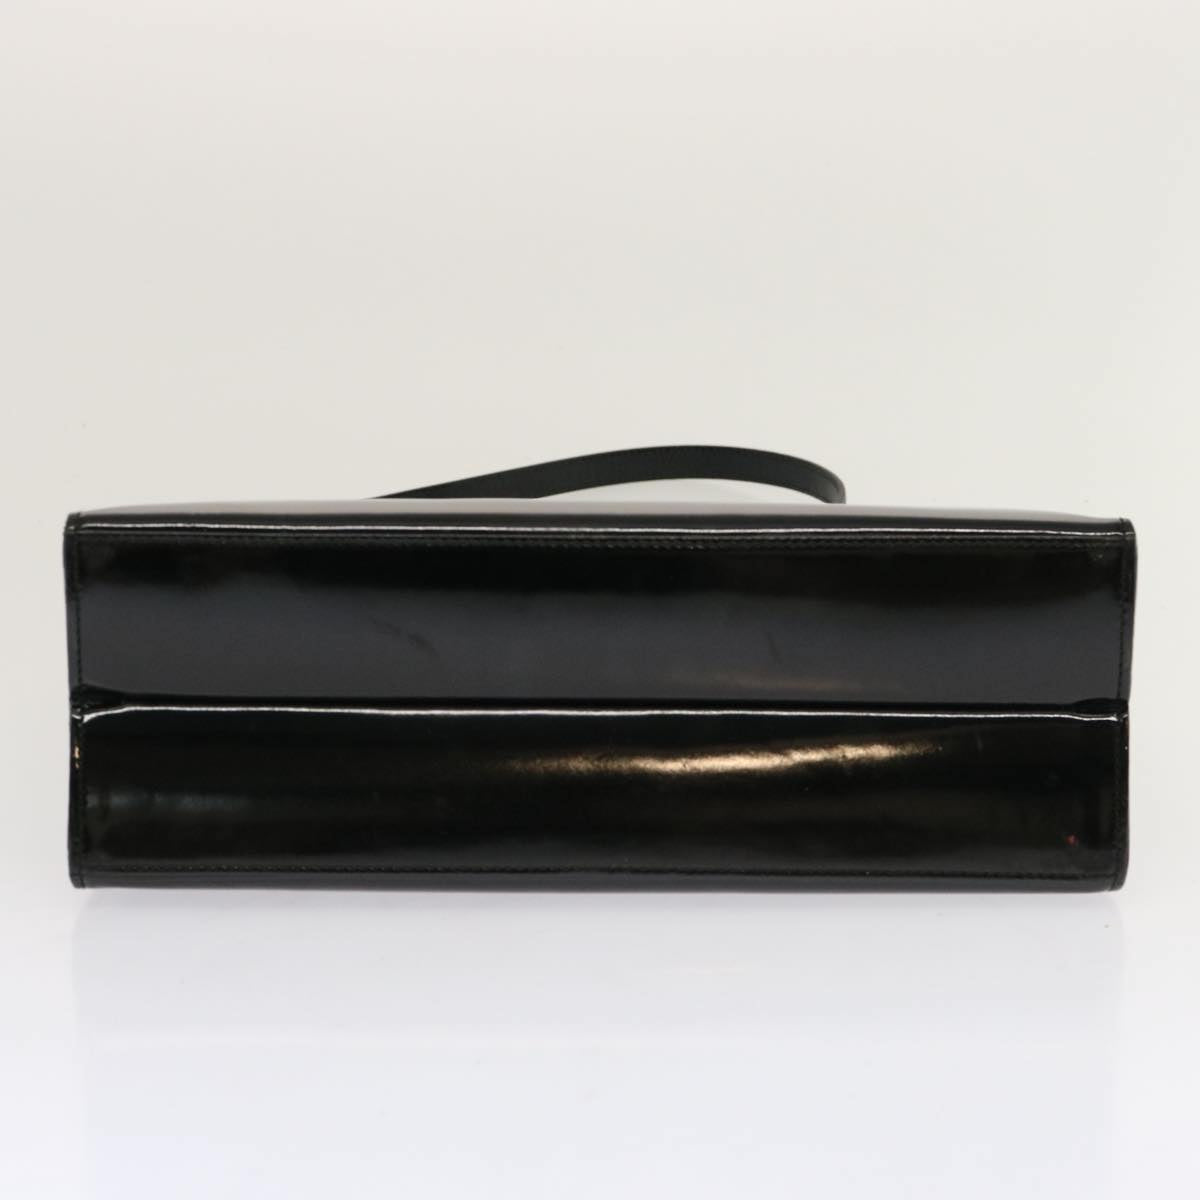 GUCCI Shoulder Bag Patent leather Black 001 1013 3037 Auth yk11369